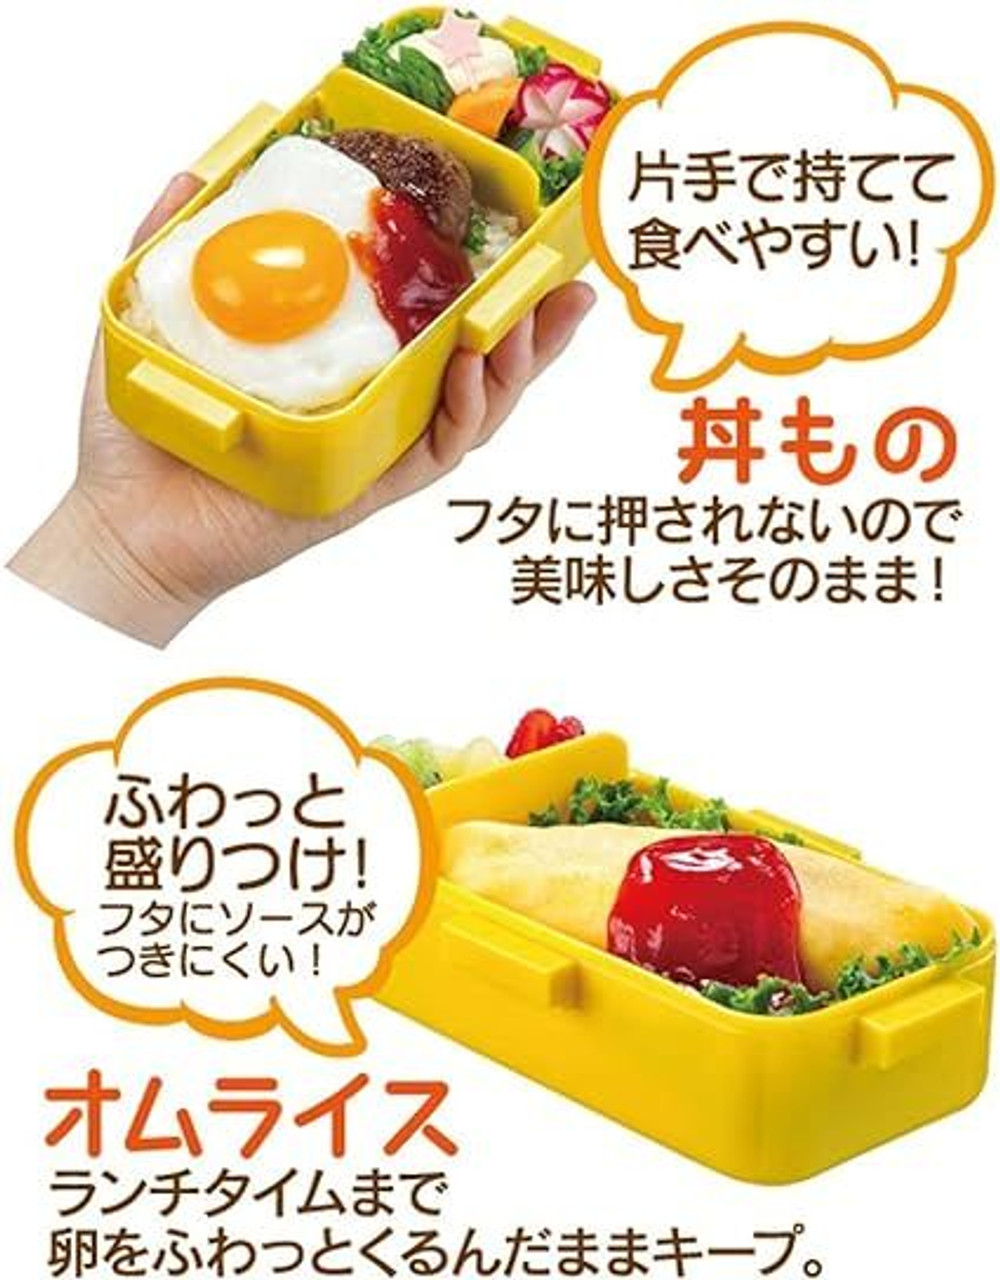 SHOBIDO Pokemon Center Lunch Box 24 360ml - Plaza Japan